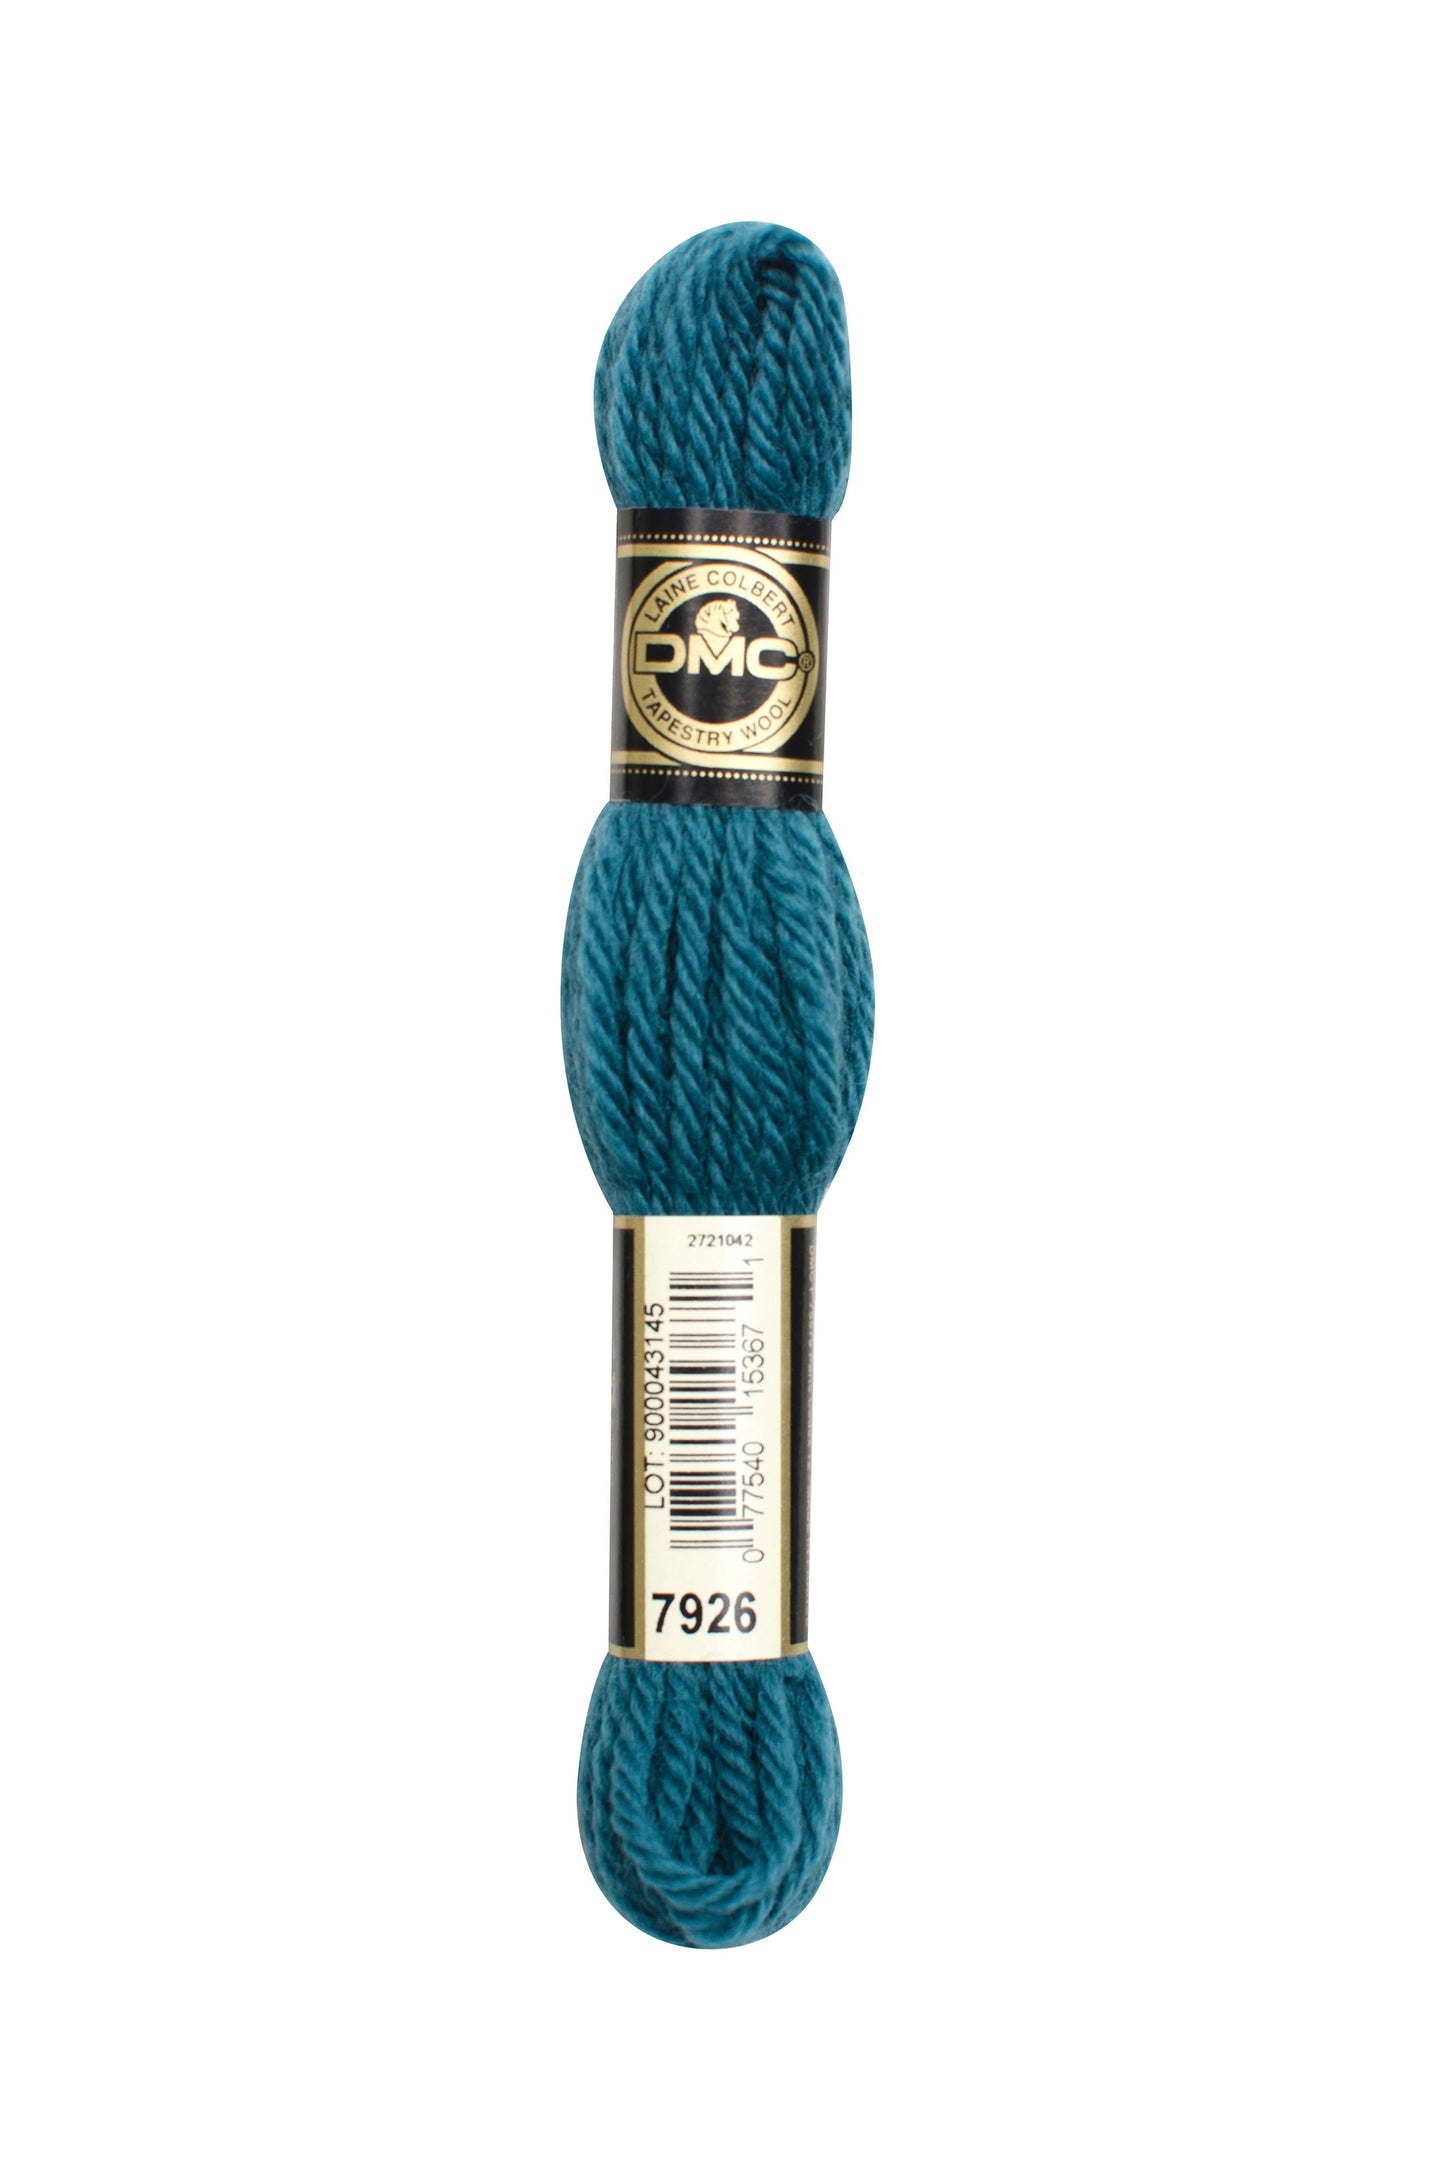 7926 – DMC Tapestry Wool